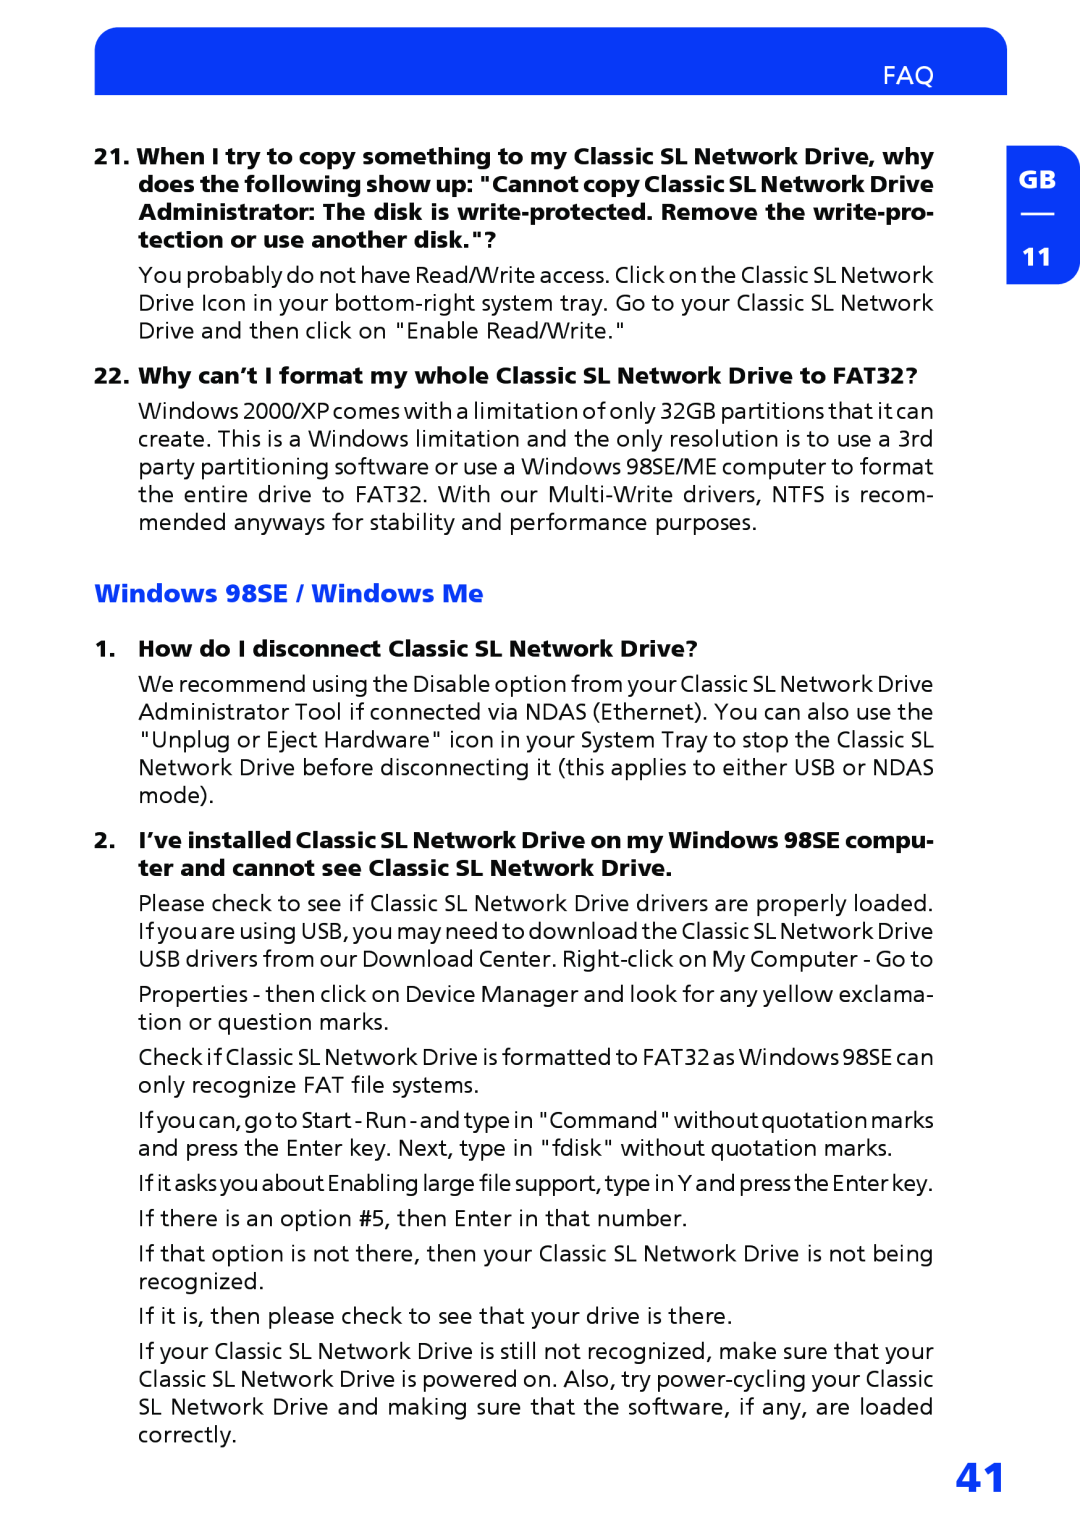 Freecom Technologies Network hard drive manual Windows 98SE / Windows Me, How do I disconnect Classic SL Network Drive? 